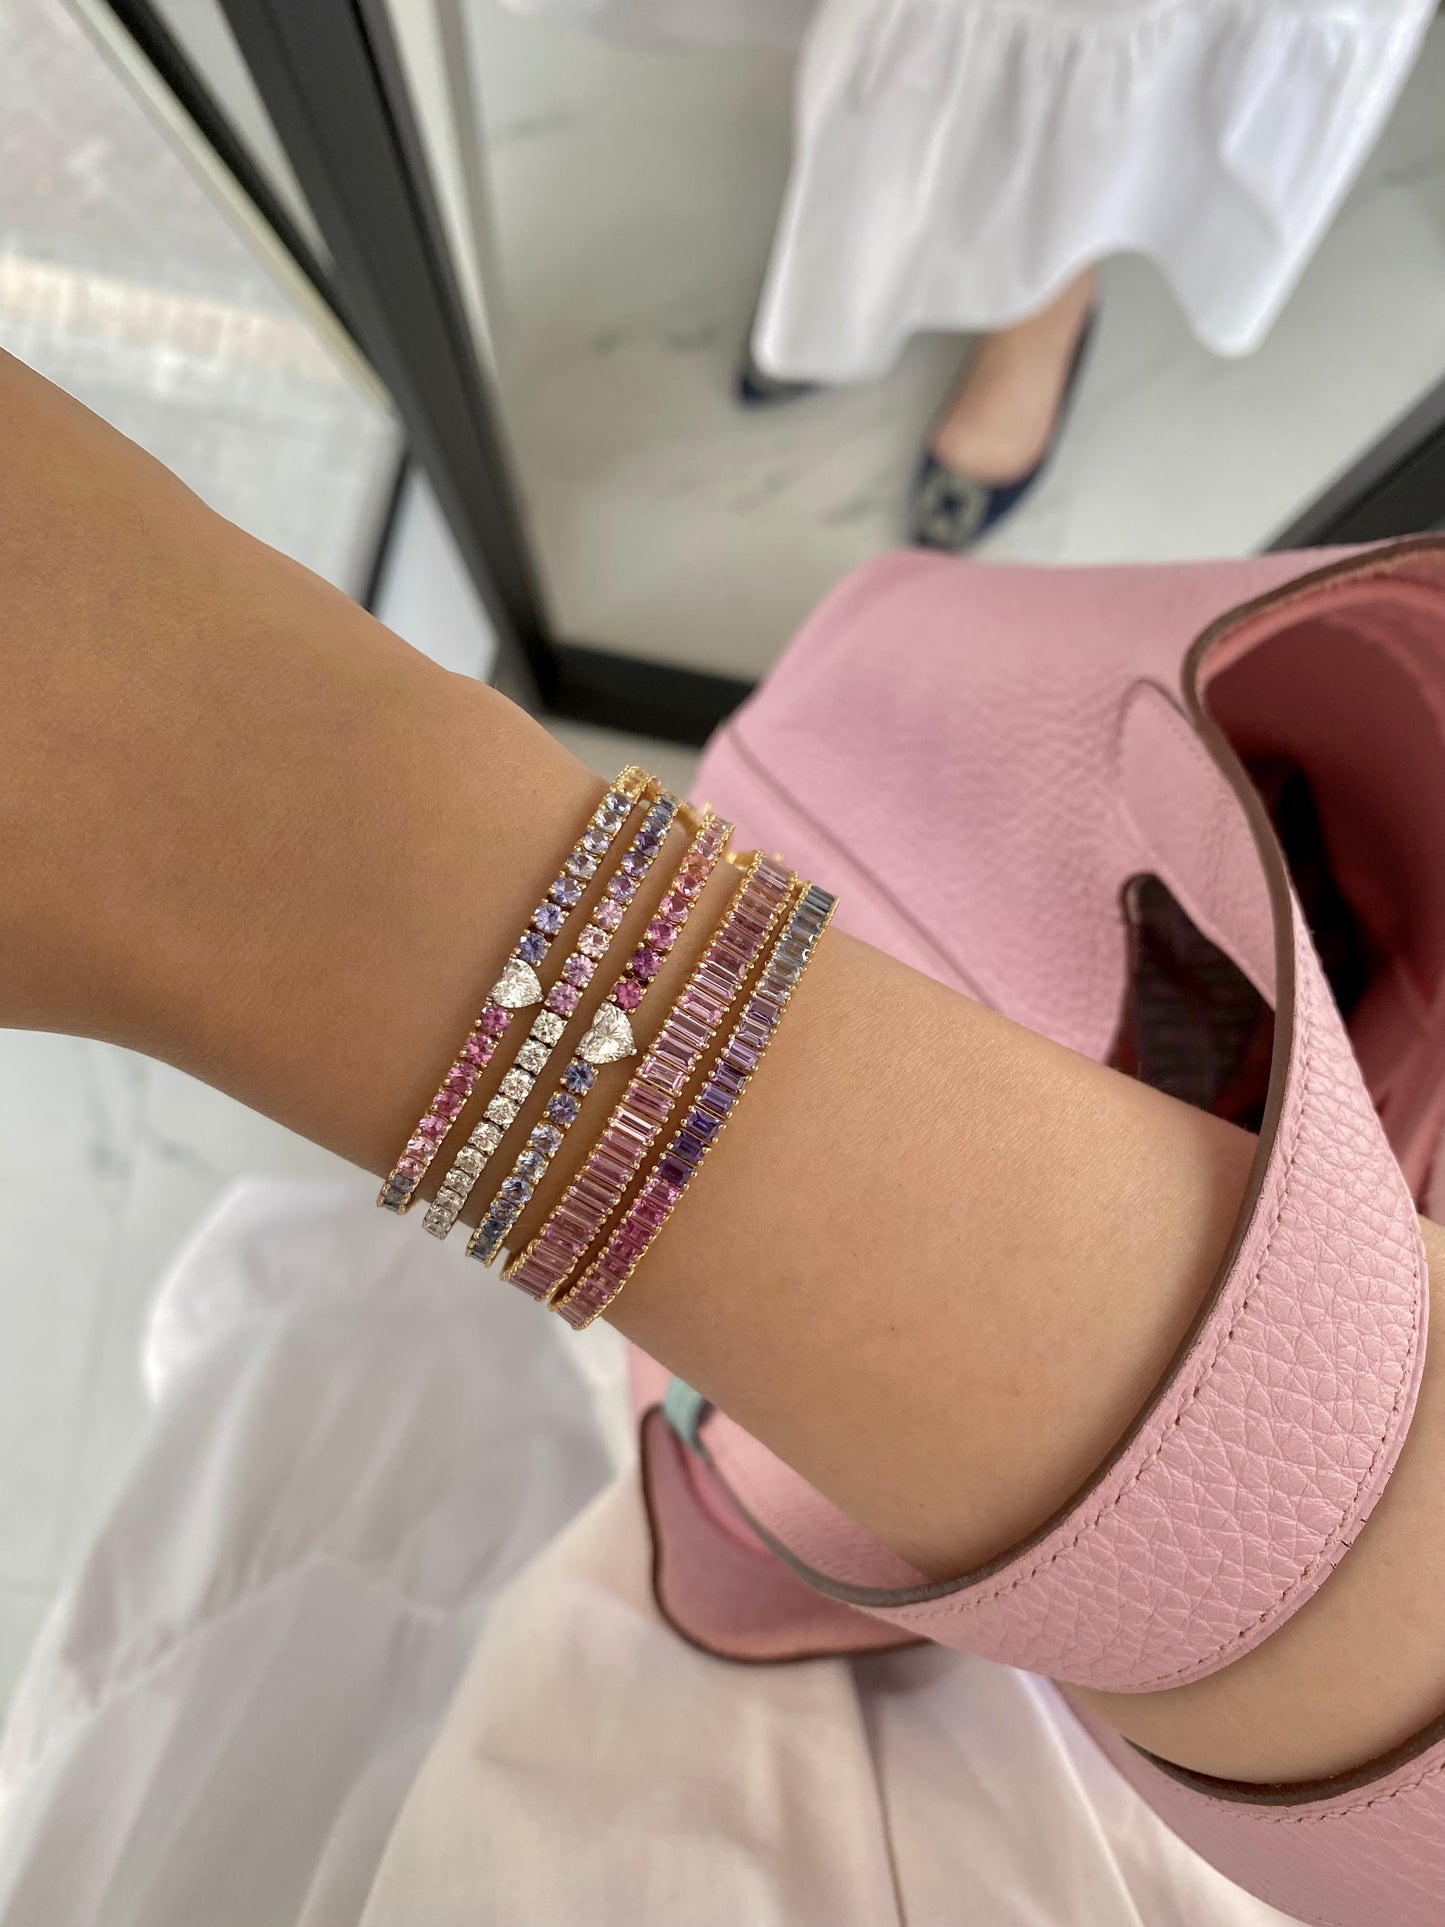 Pink Sapphire Baguette Tennis Bracelet